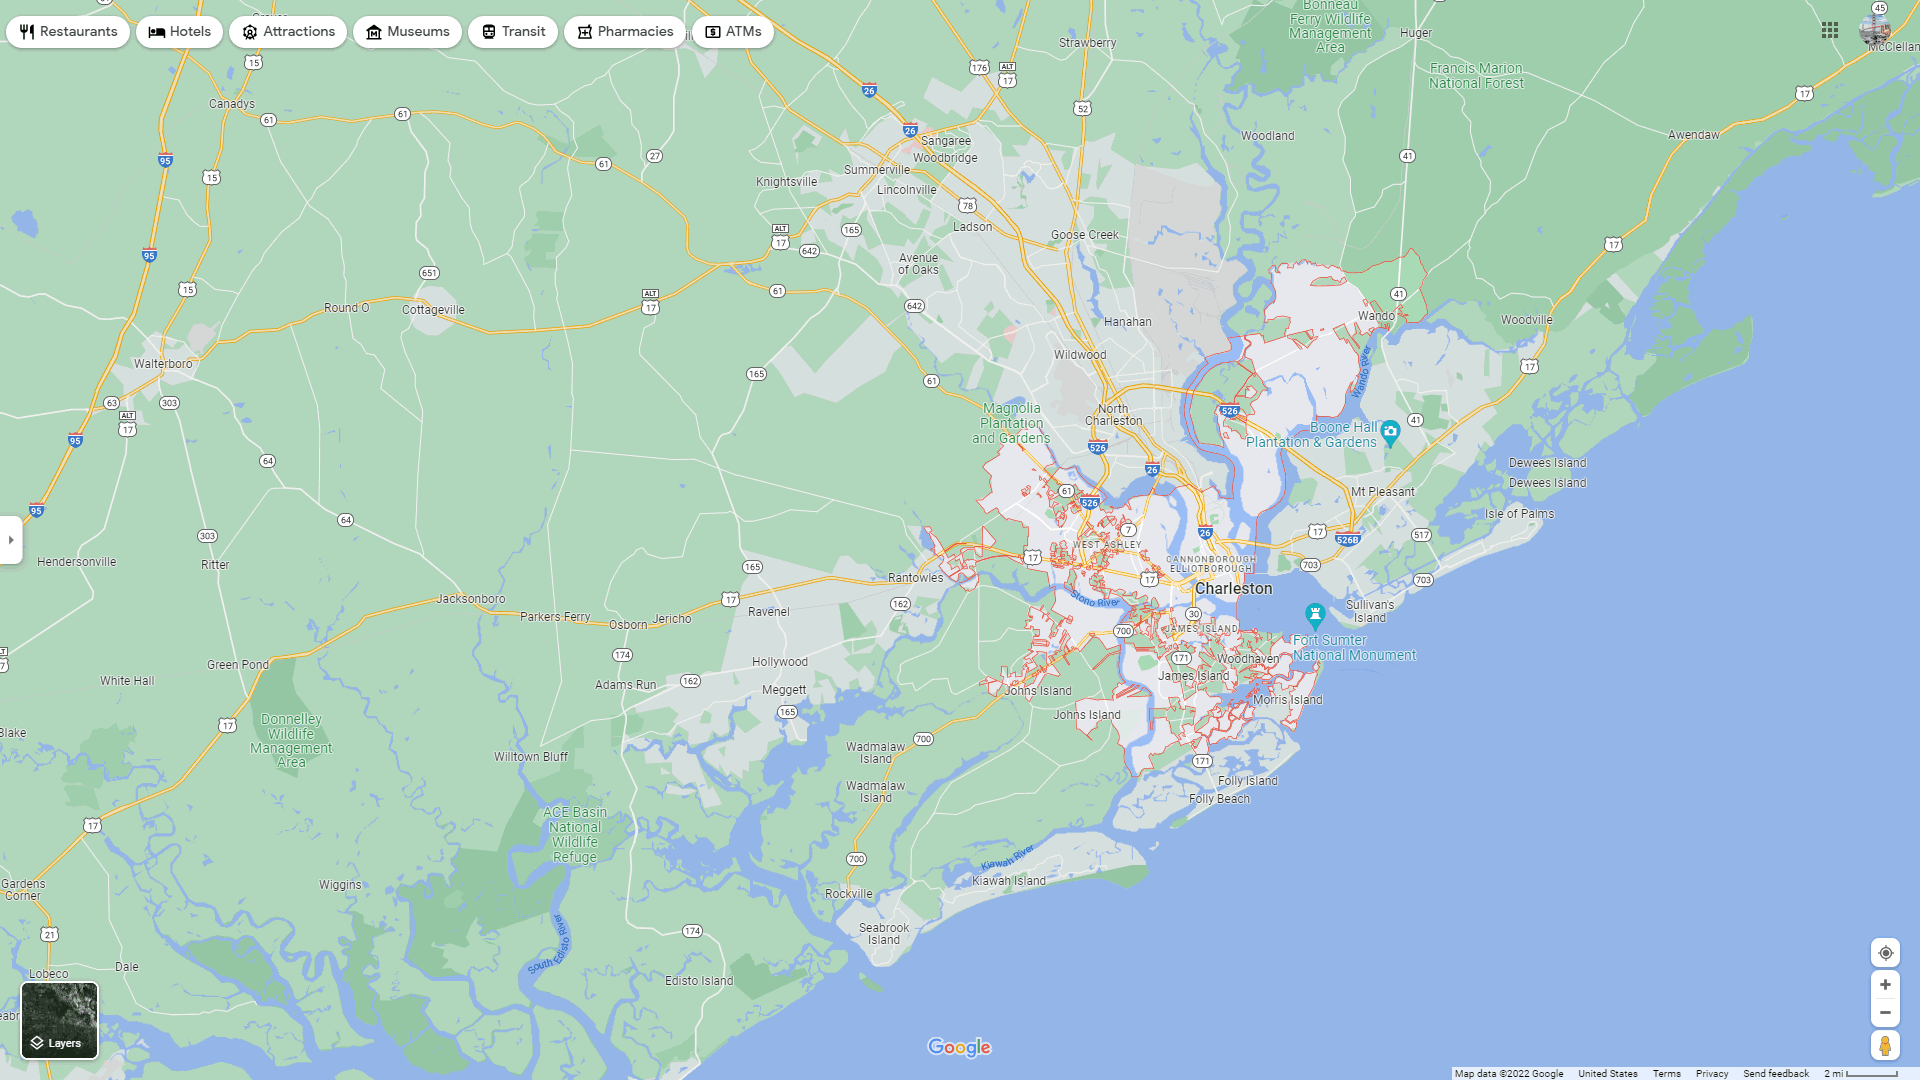 Charleston South Carolina Map